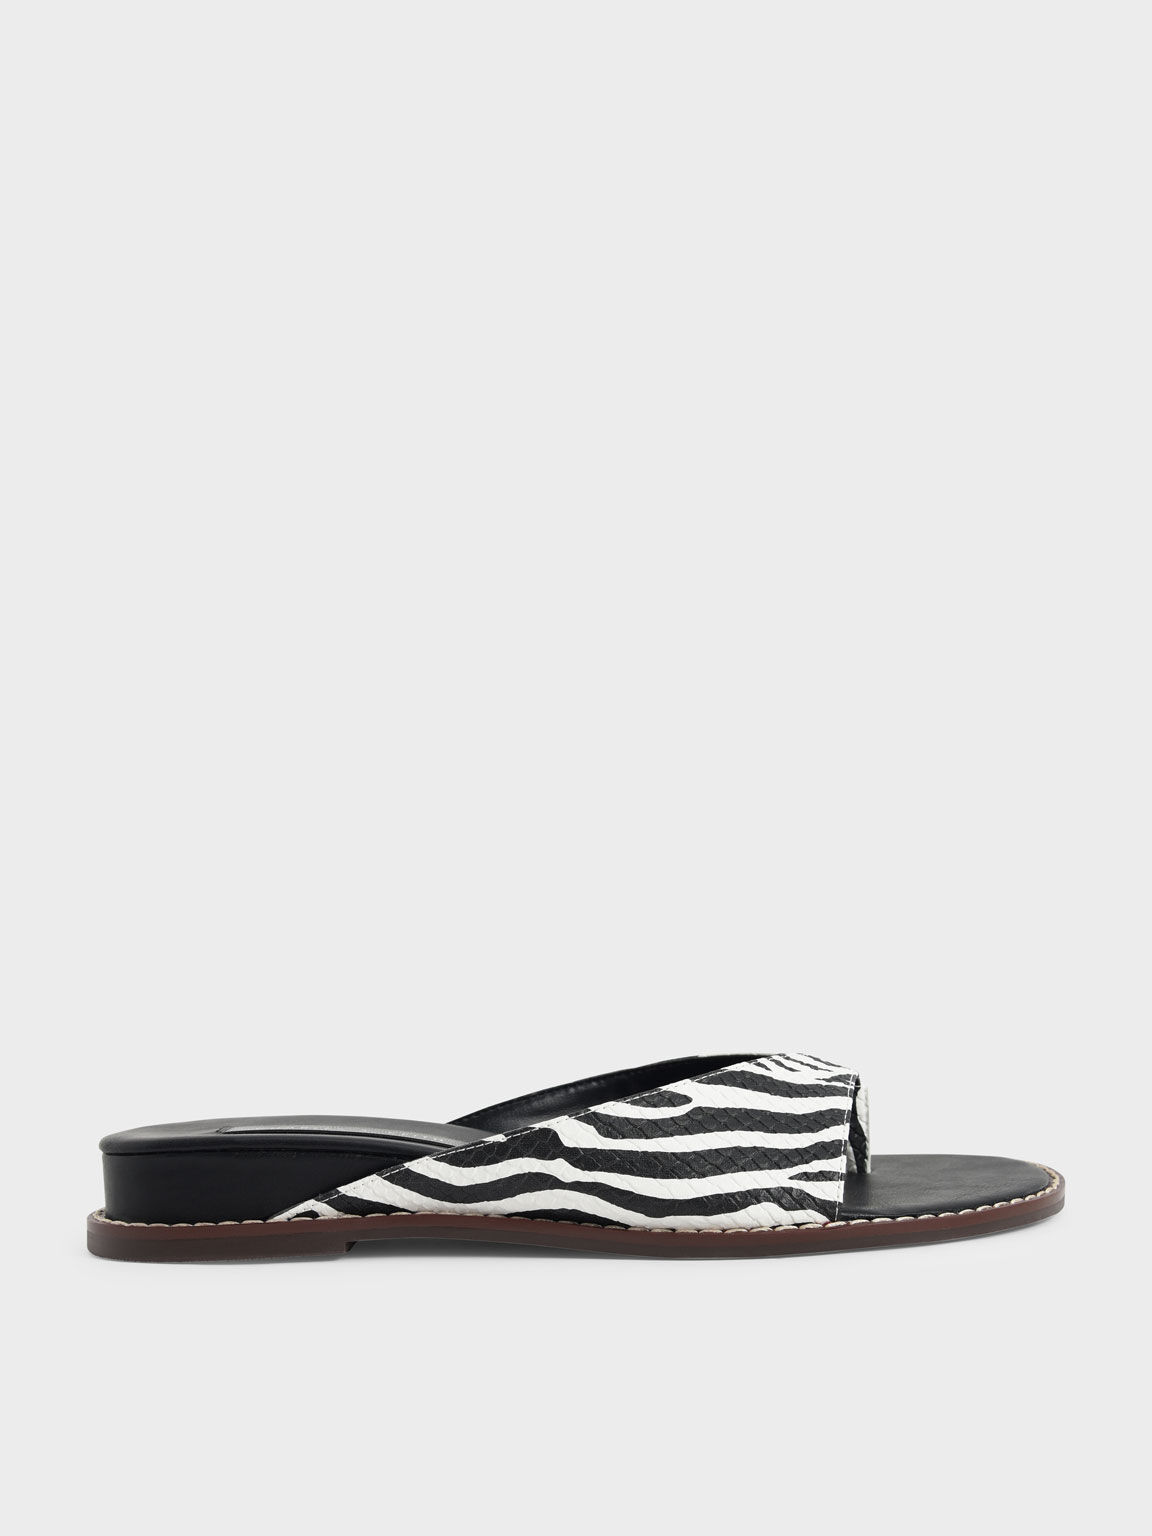 Women's Zebra  Ankle Strap Sandals Flip Flops Size 5.5-10 